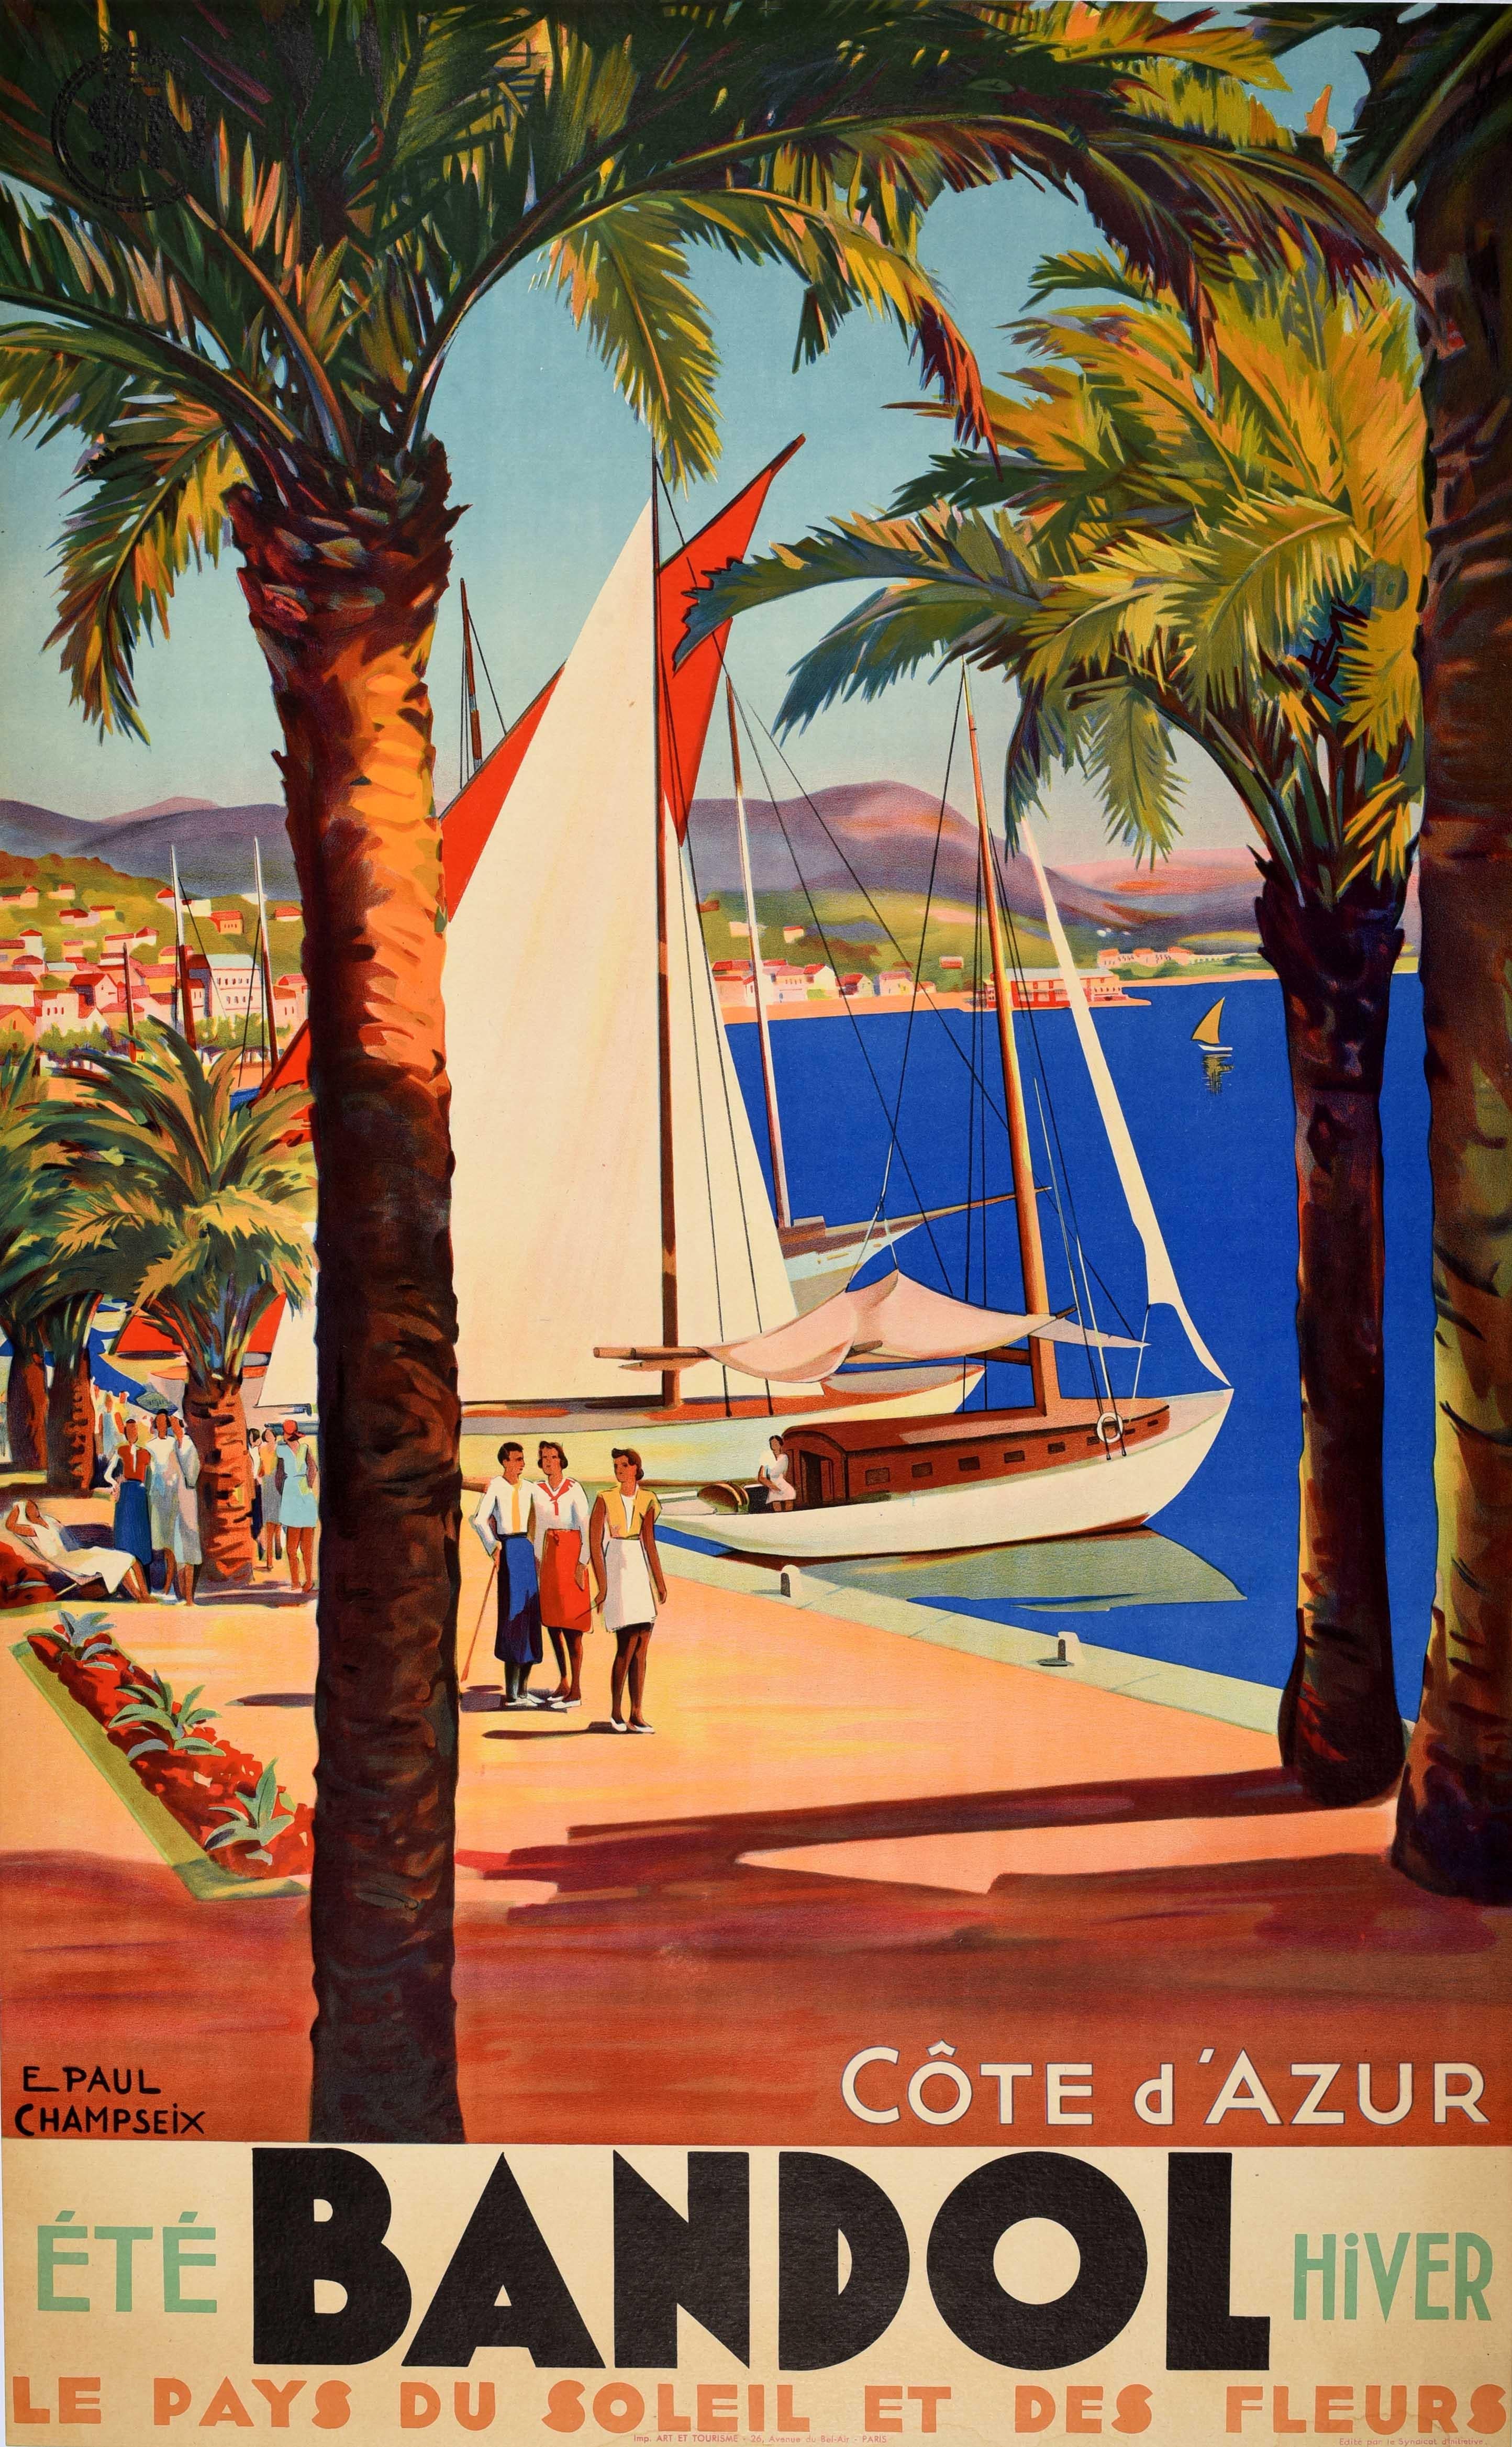 E. Paul Champseix Print - Original Vintage Travel Poster Bandol Cote d'Azur French Riviera Art Deco Design